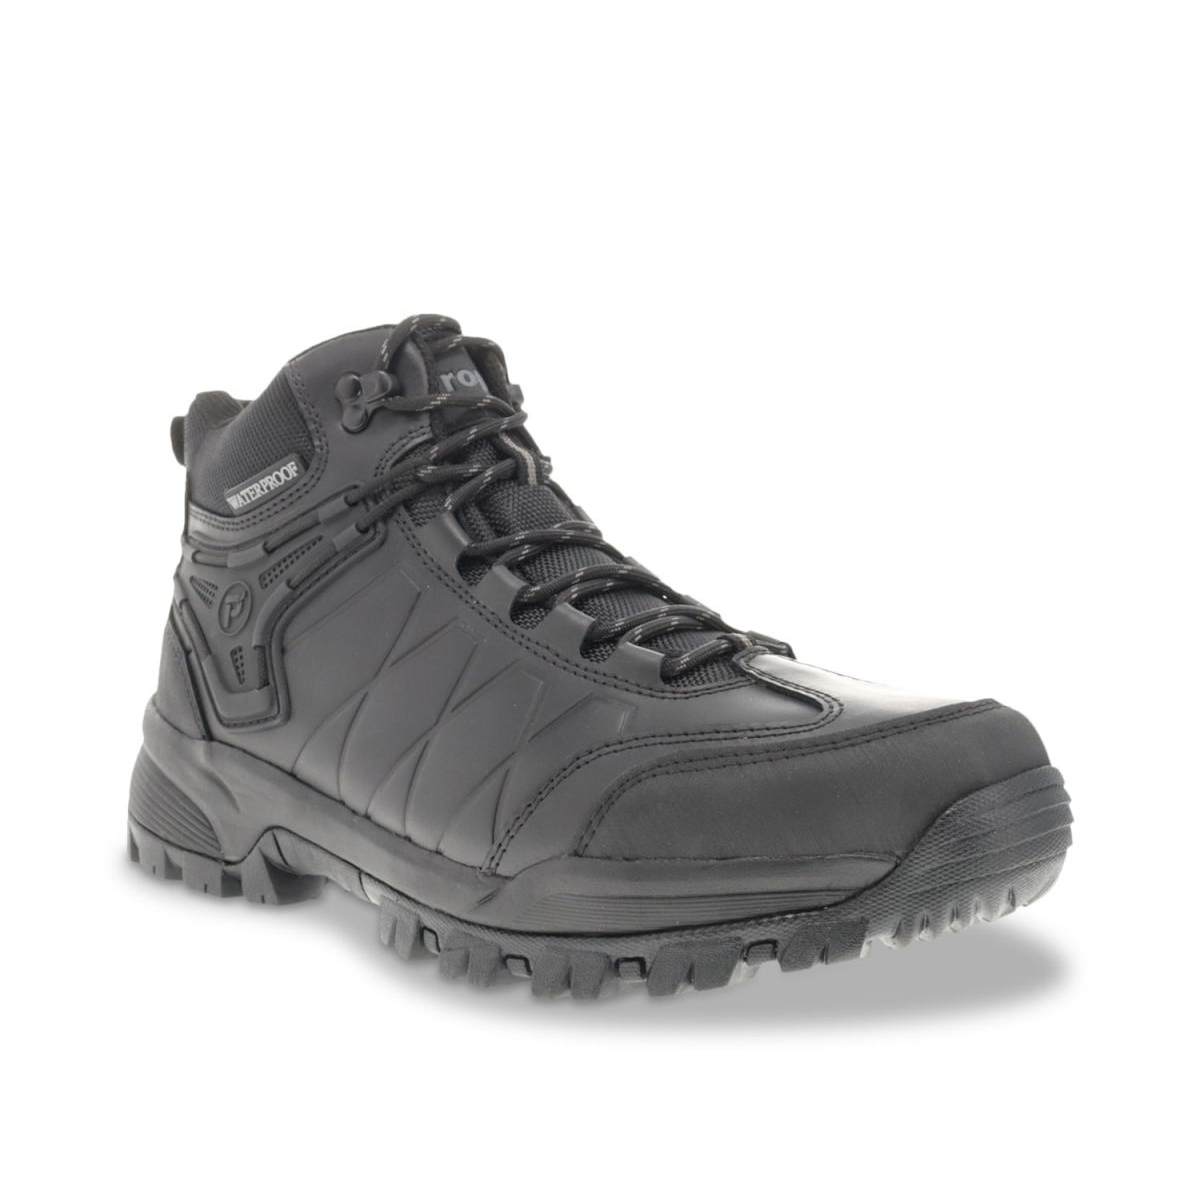 Propet Men's Ridge Walker Force Hiking Boots Black - MBA052LBLK BLACK - BLACK, 12 Wide